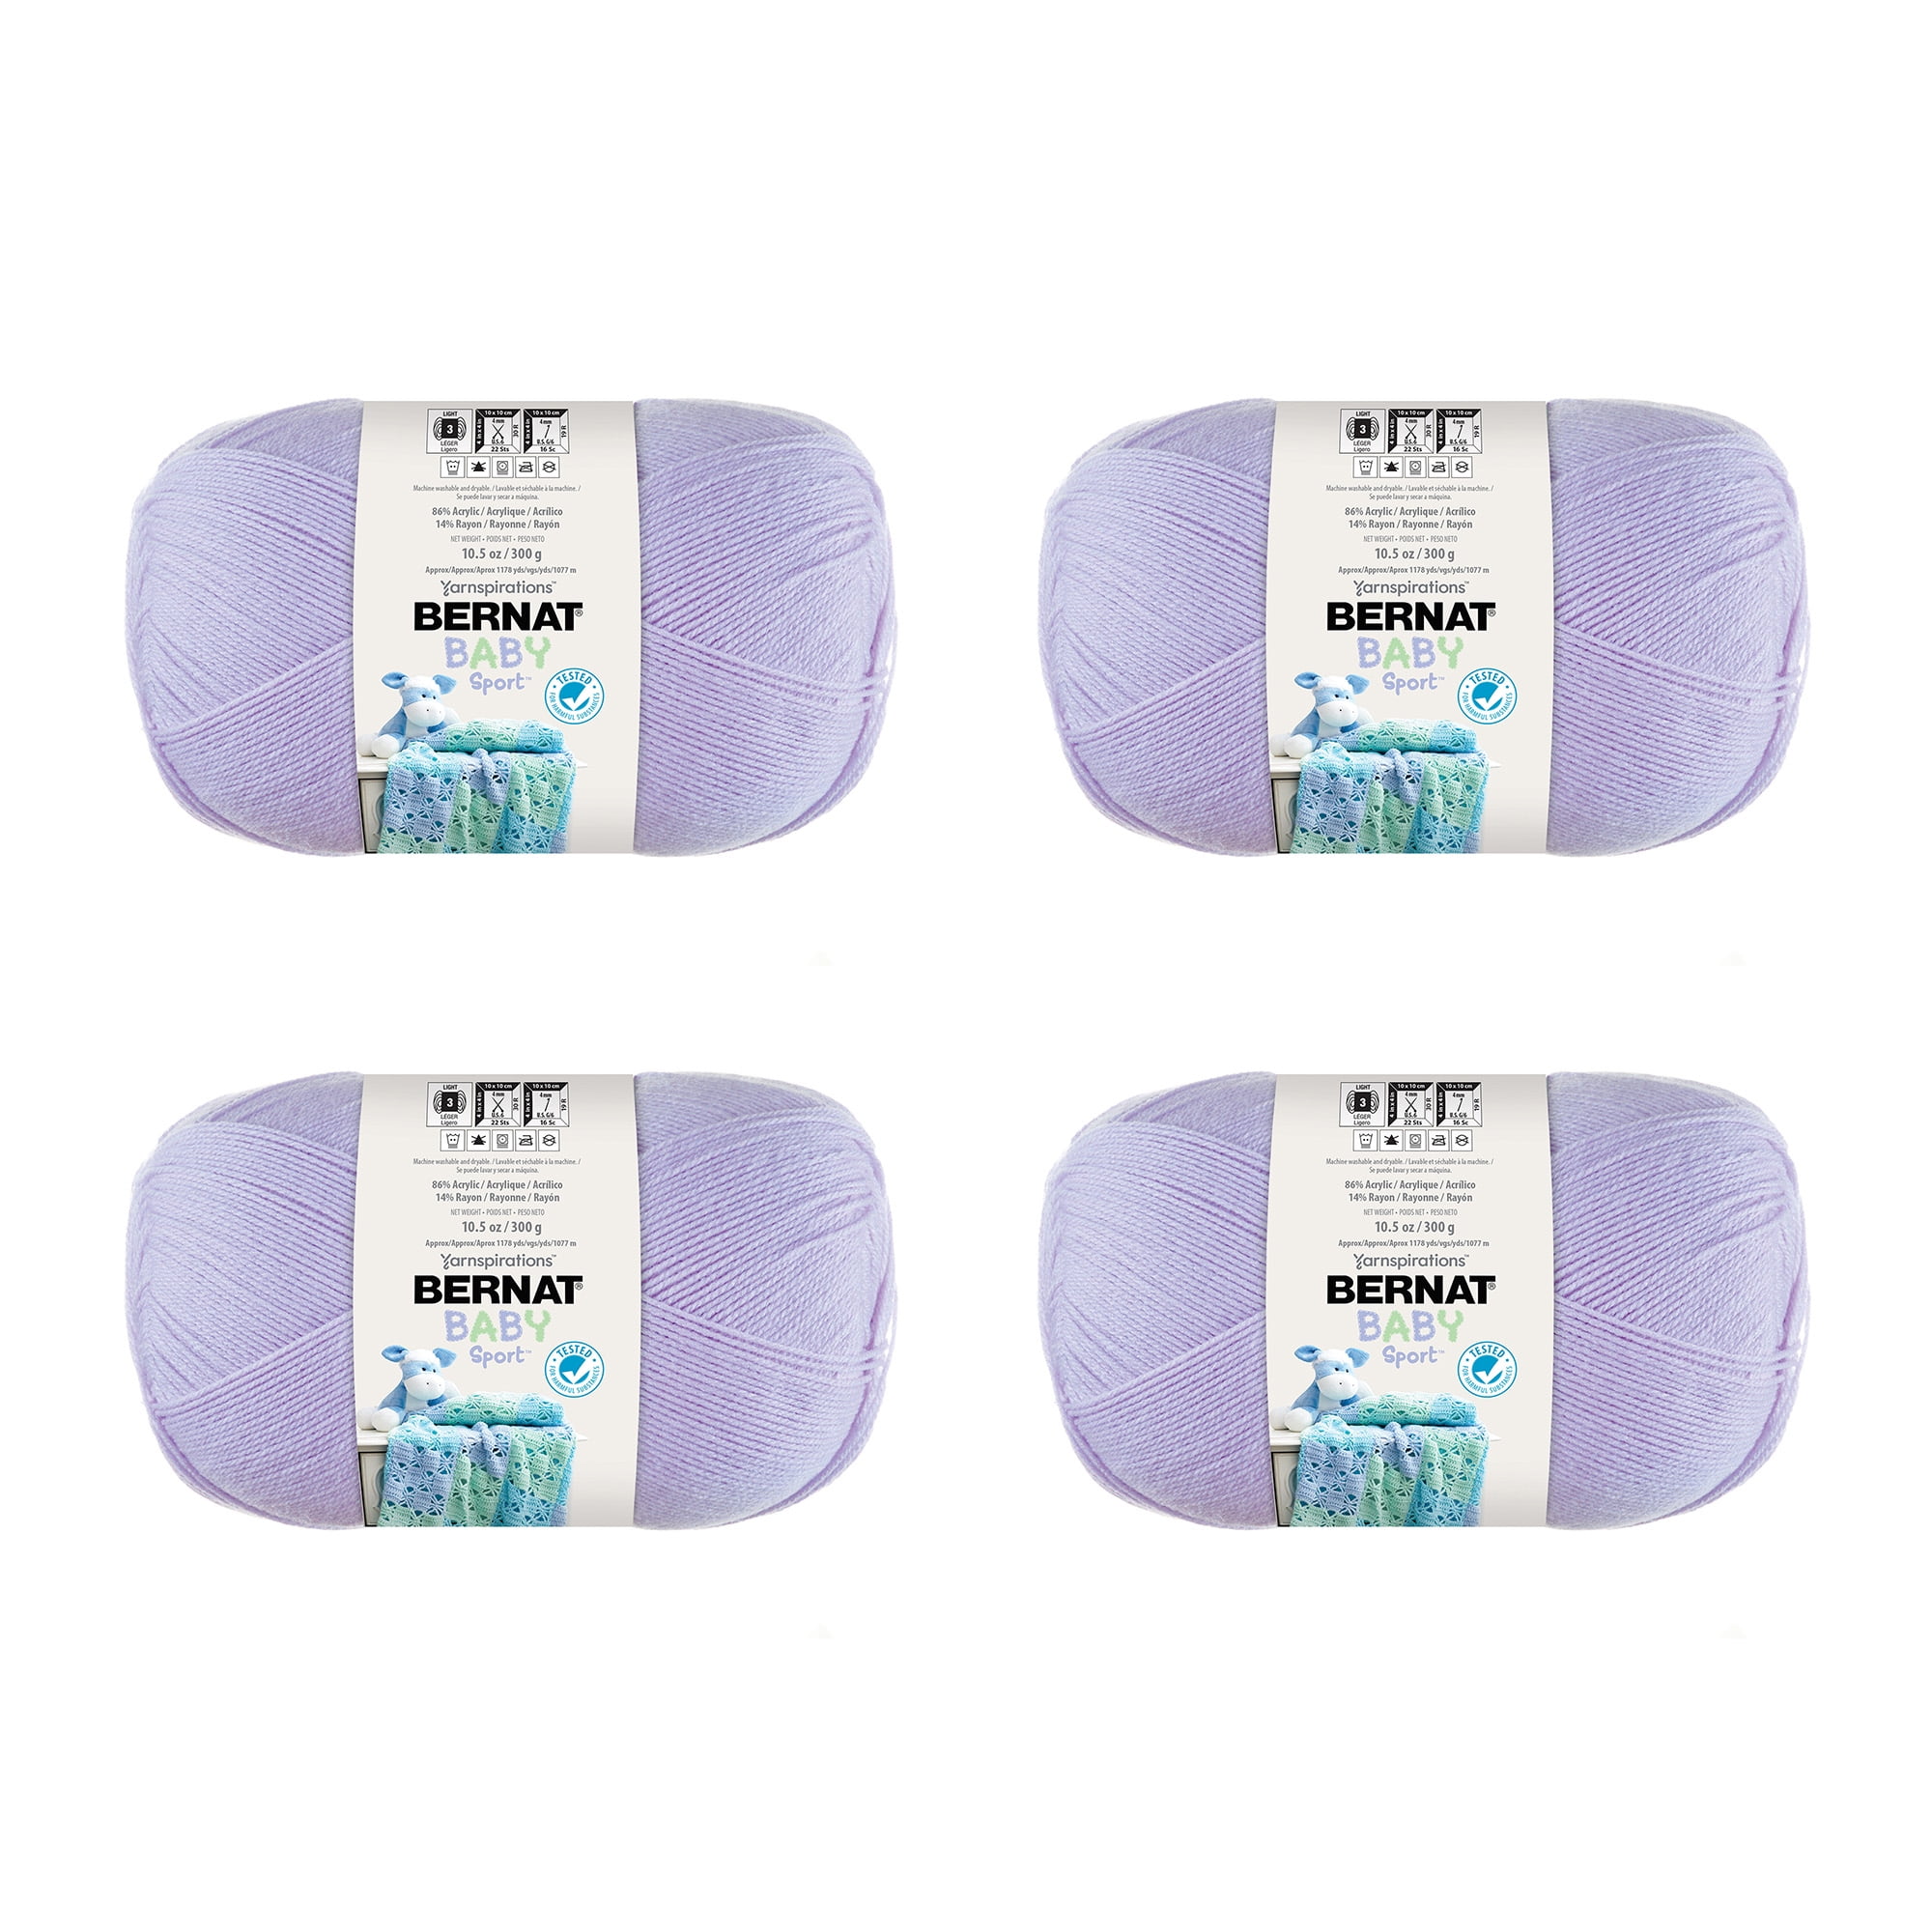 Bernat Baby Sport #3 Light Acrylic Yarn, Lavender 10.5oz/300g, 1077 Yards (4 Pack), Size: Light (3)